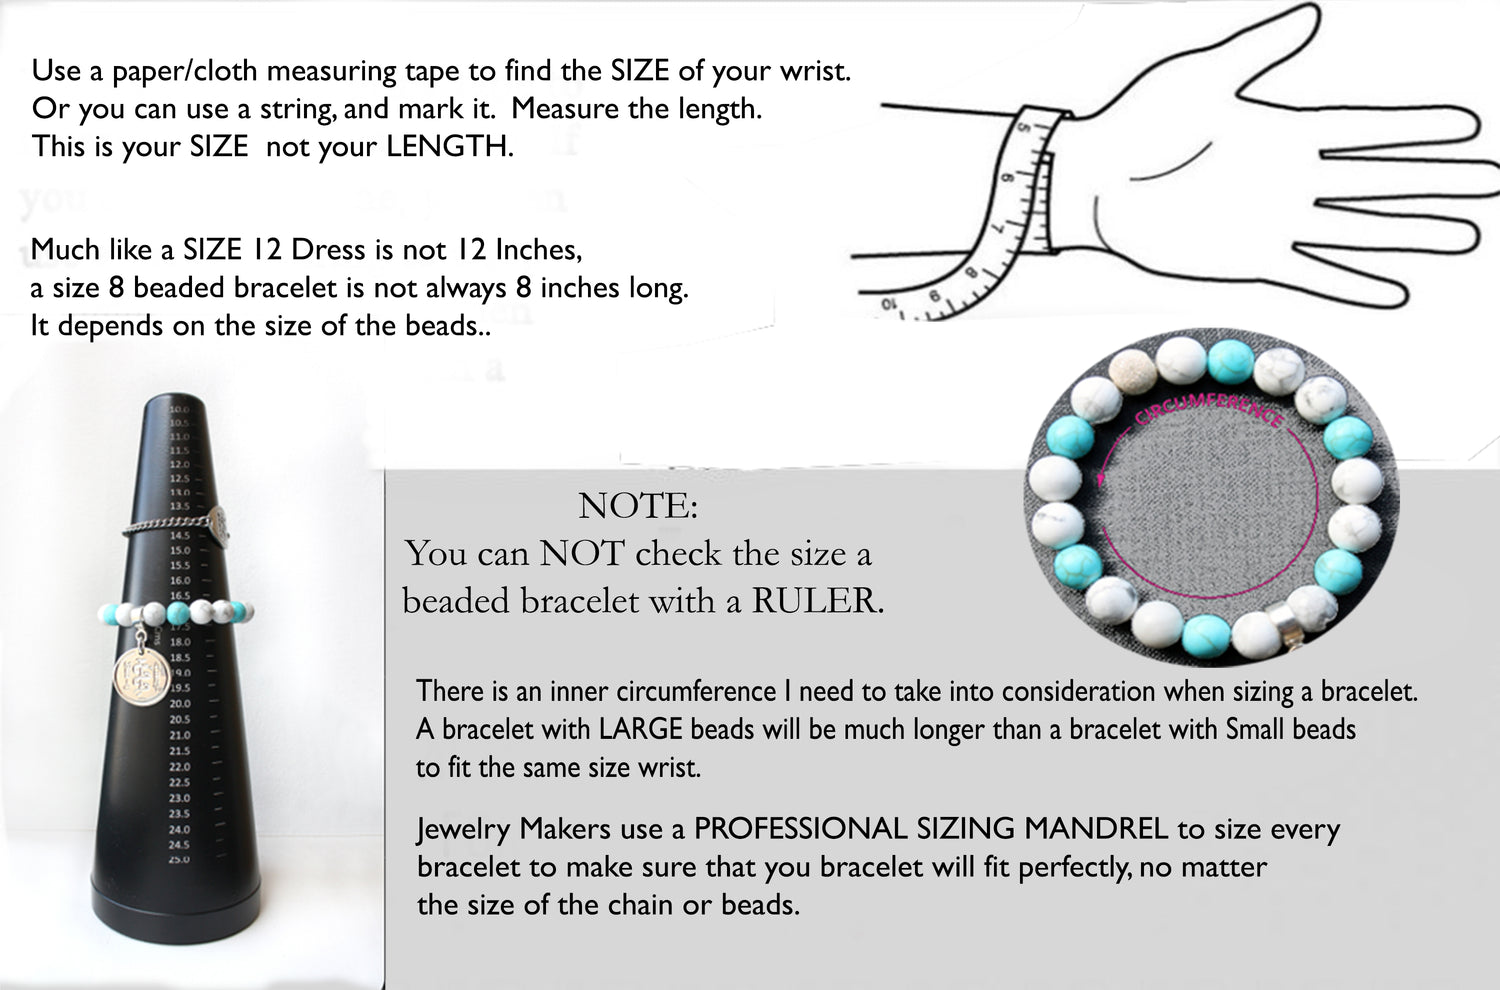 Turquoise Mens Birthstone Bracelet, December Sagittarius Zodiac Gemstones, 4MM Handmade Everyday Black Beaded Bracelets